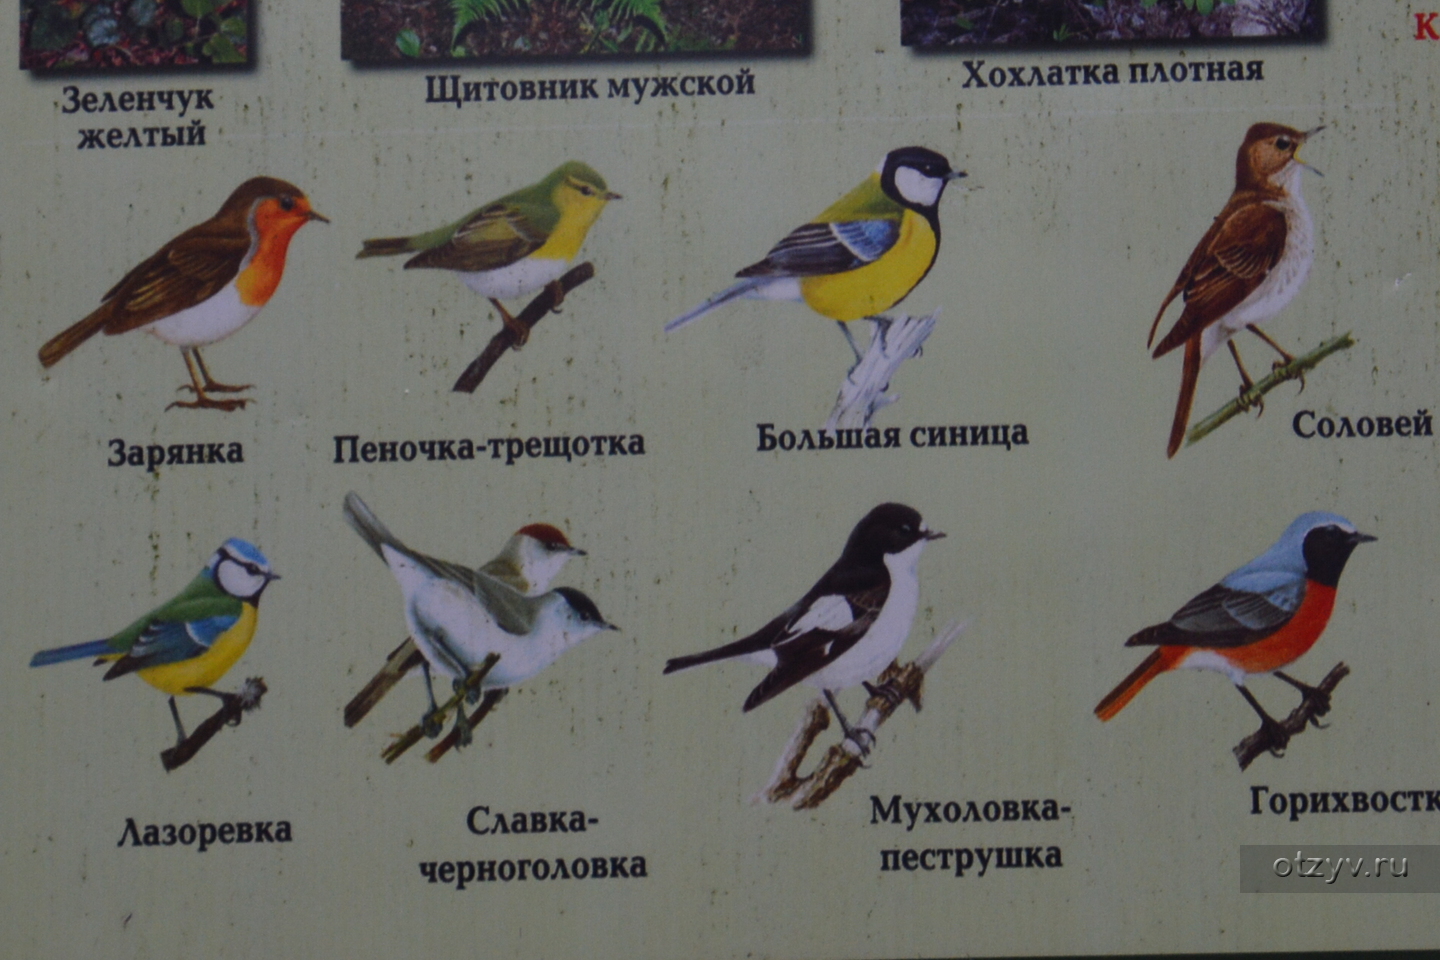 Птицы Костромской Области Фото С Названиями